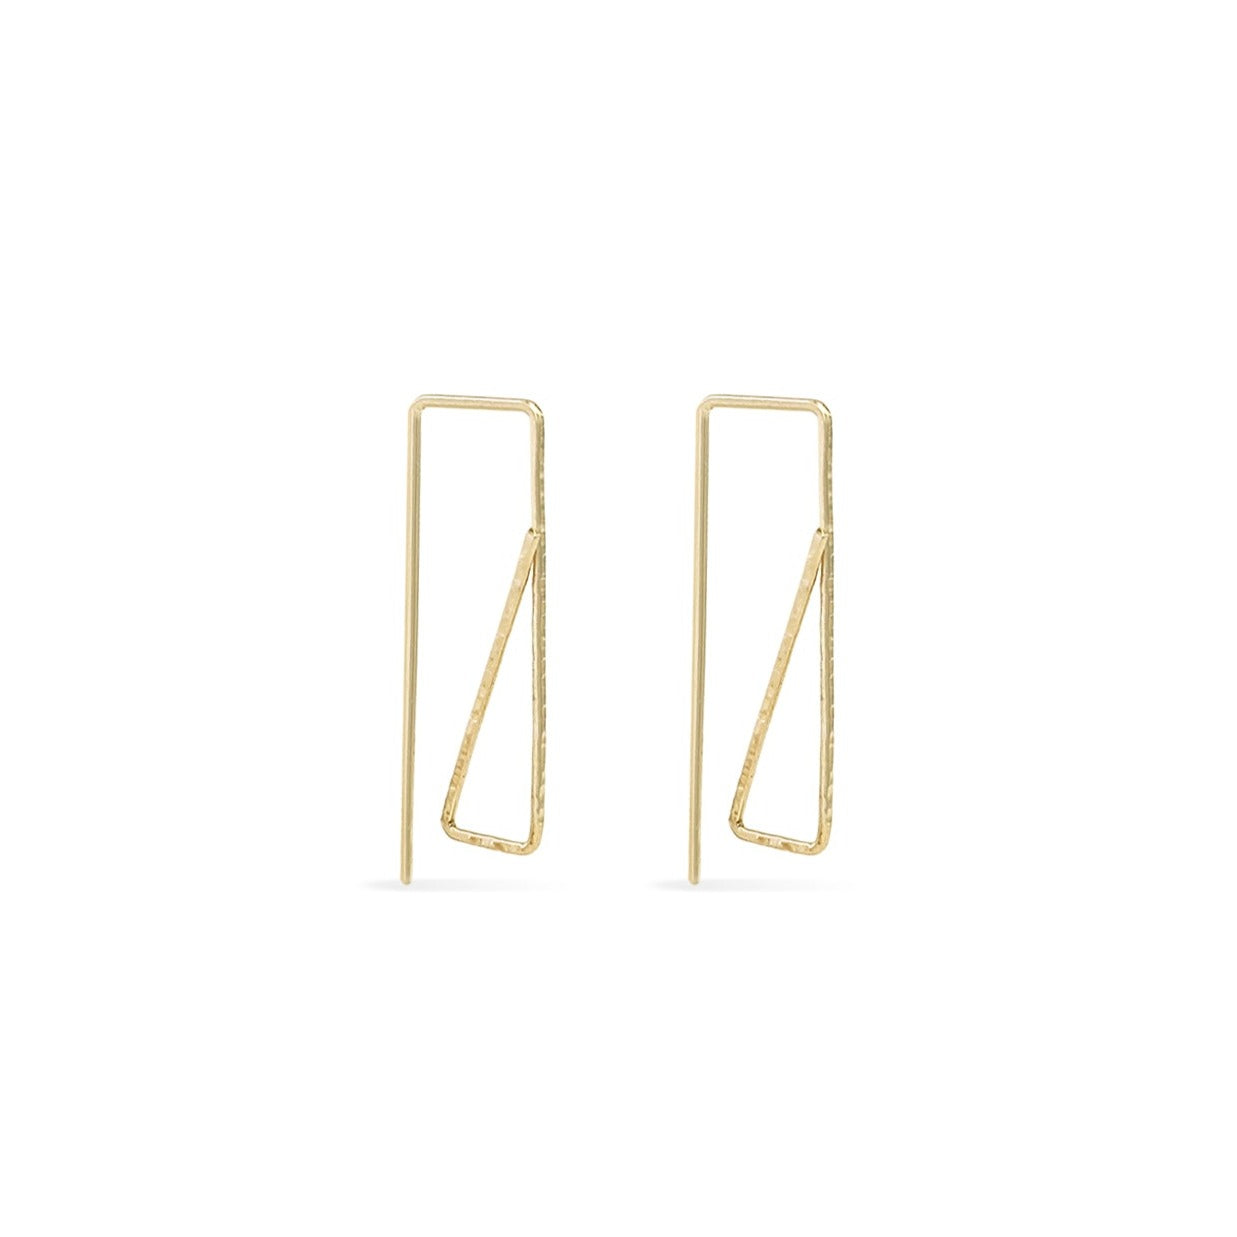 Gold hammered rectangular wire hoop earrings